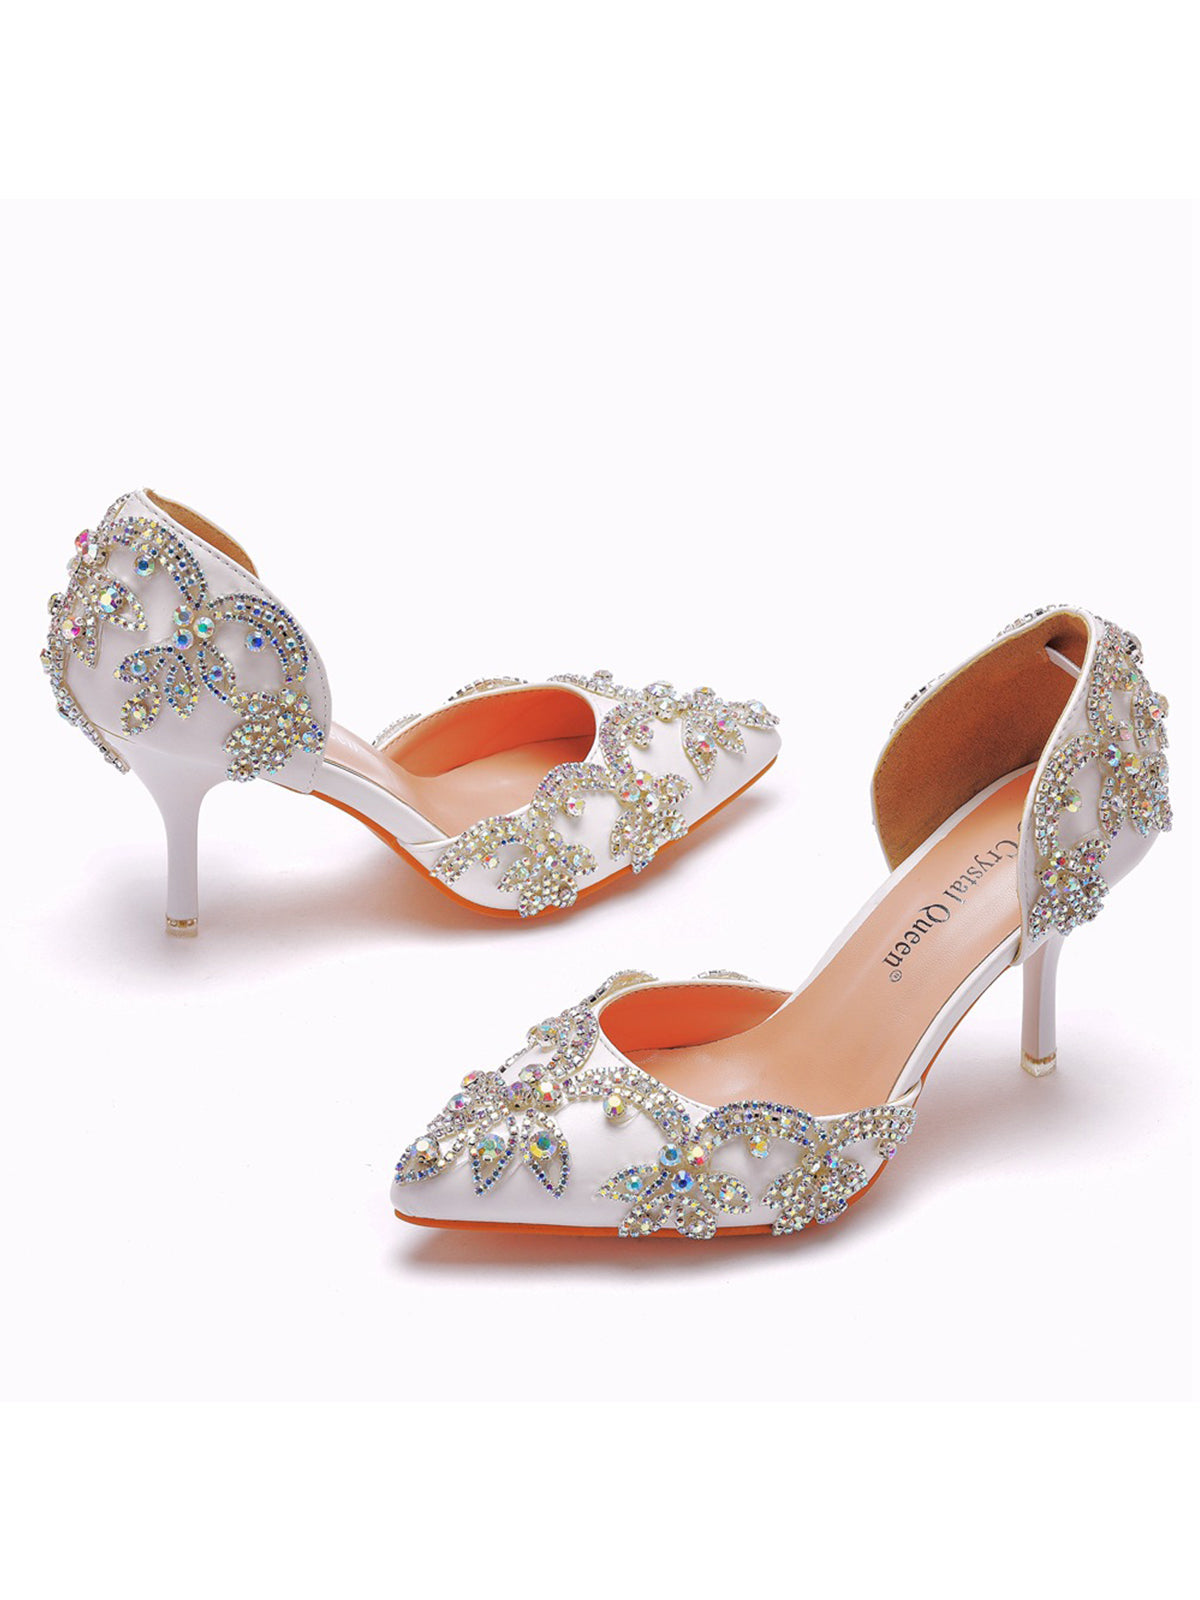 Woman's Wedding Shoes Pointed Toe rhinestone Stiletto